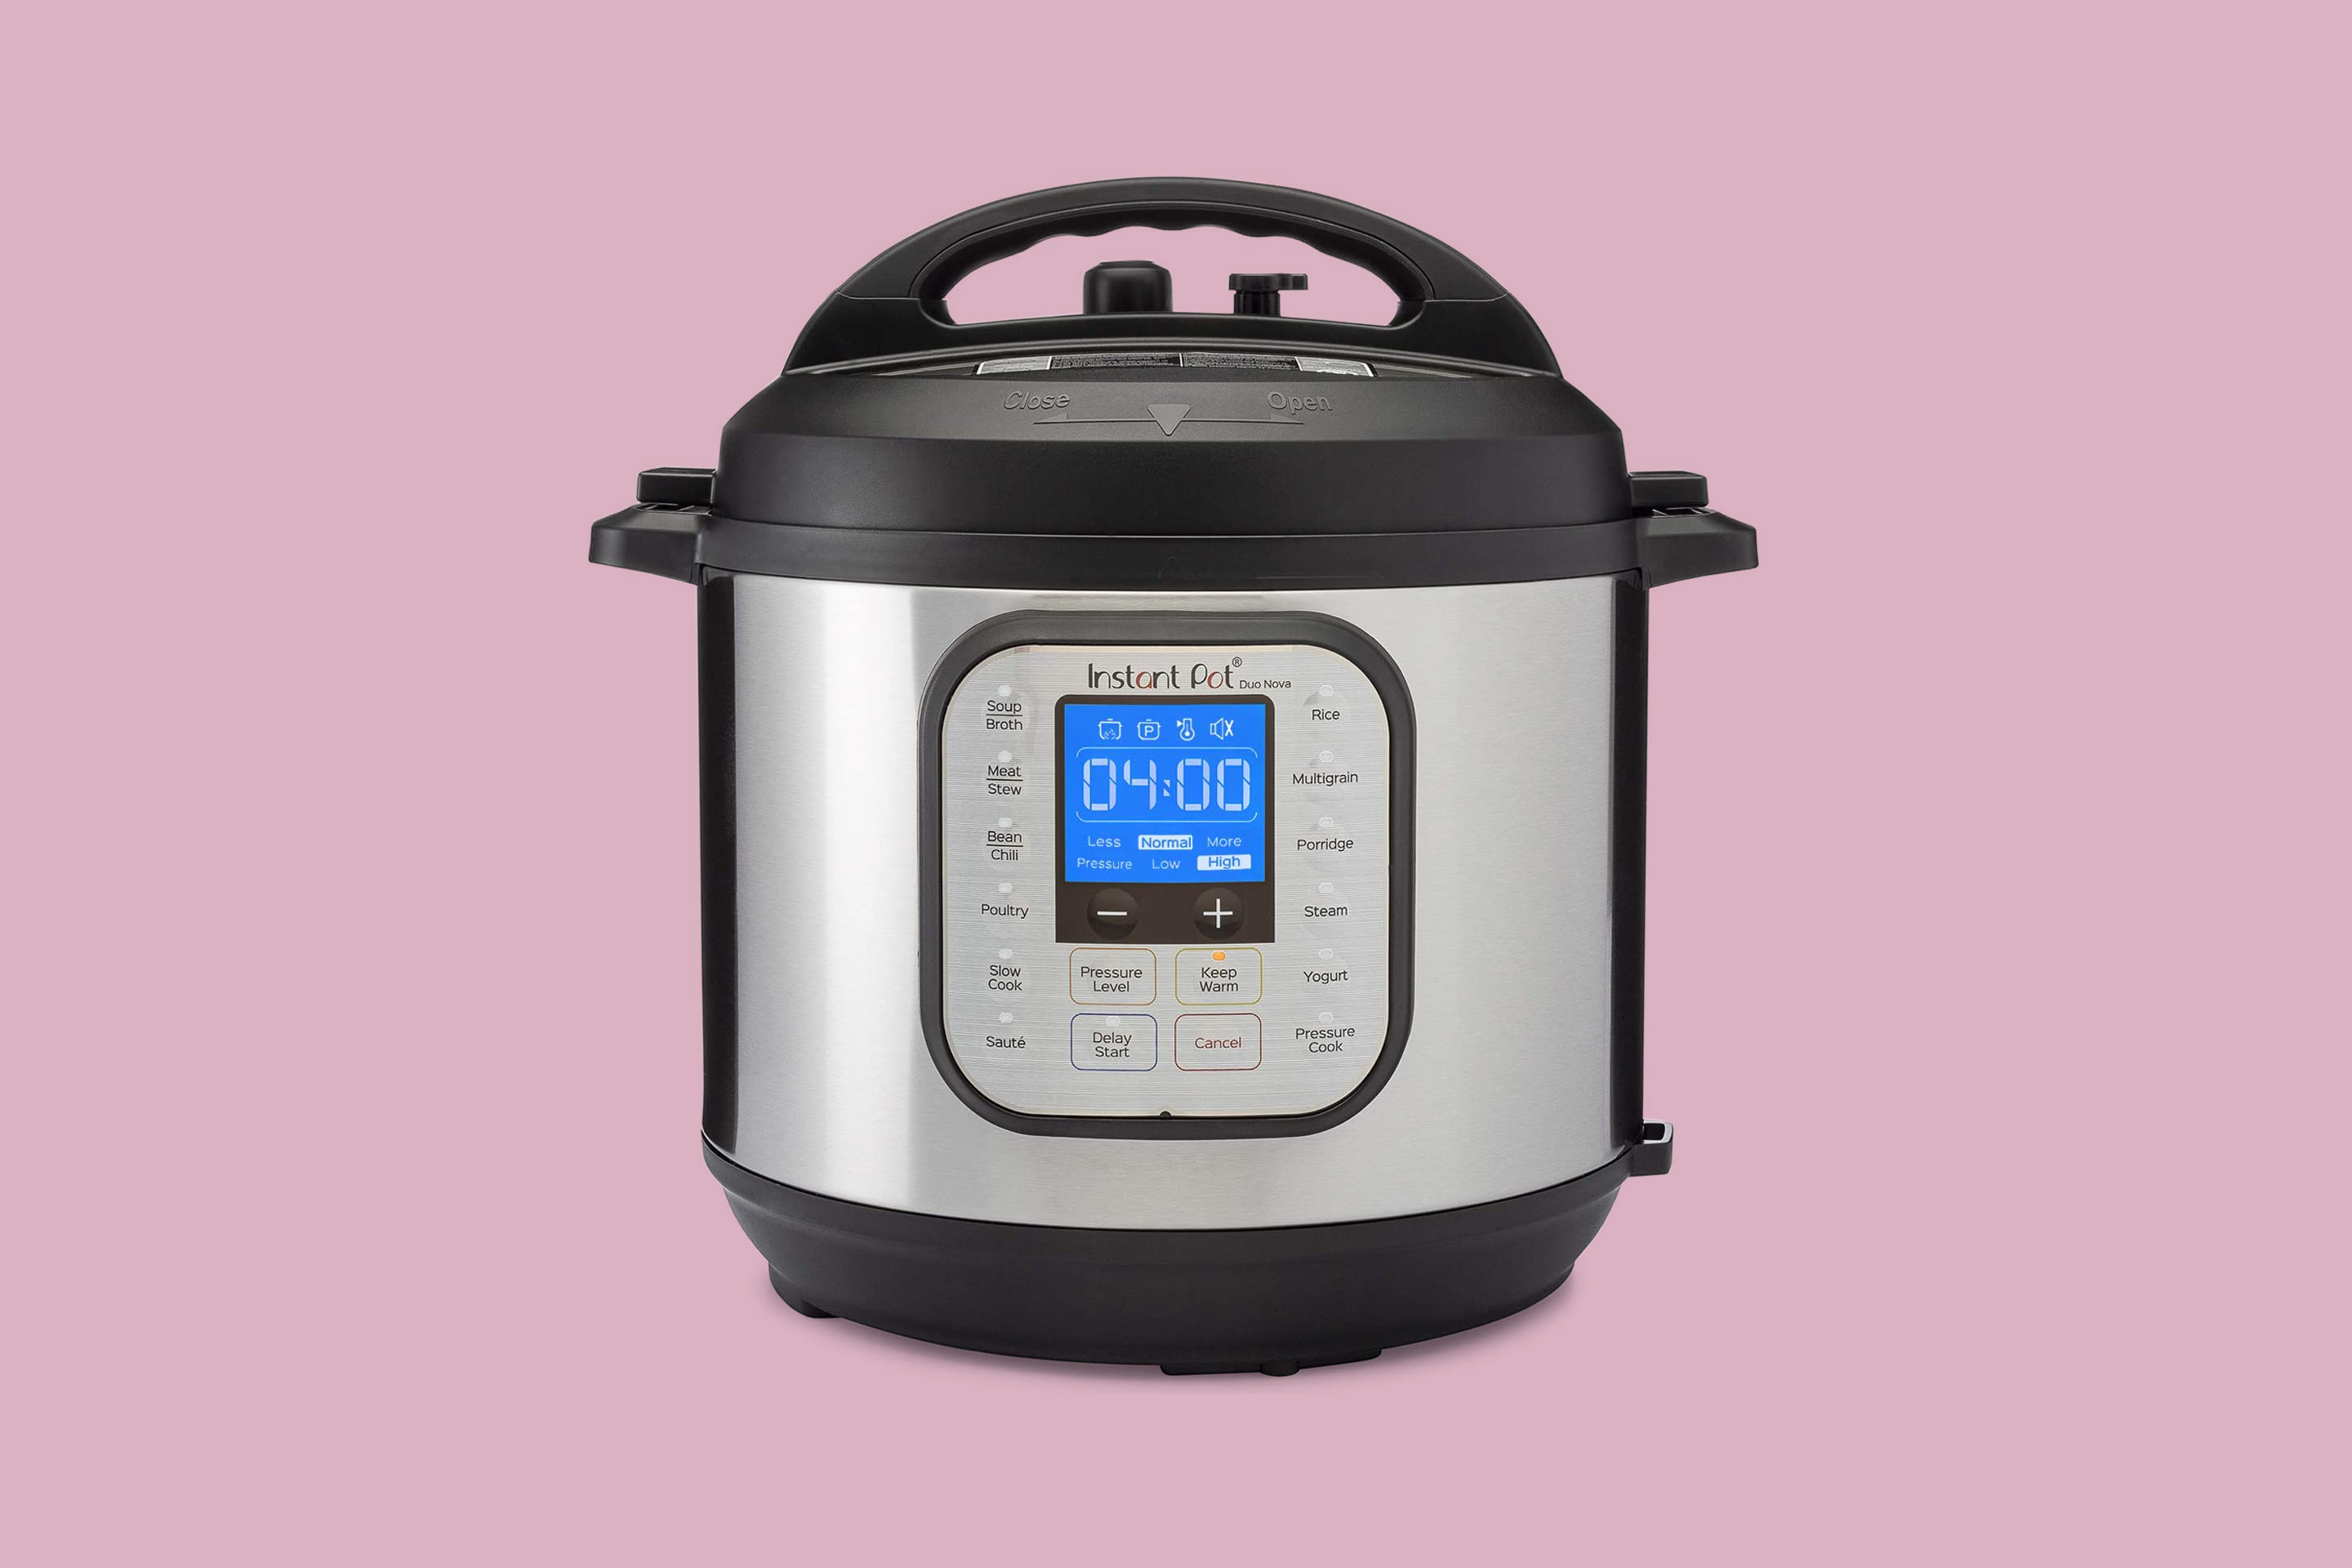  Instant Pot Duo Nova 7-in-1 Electric Pressure Cooker